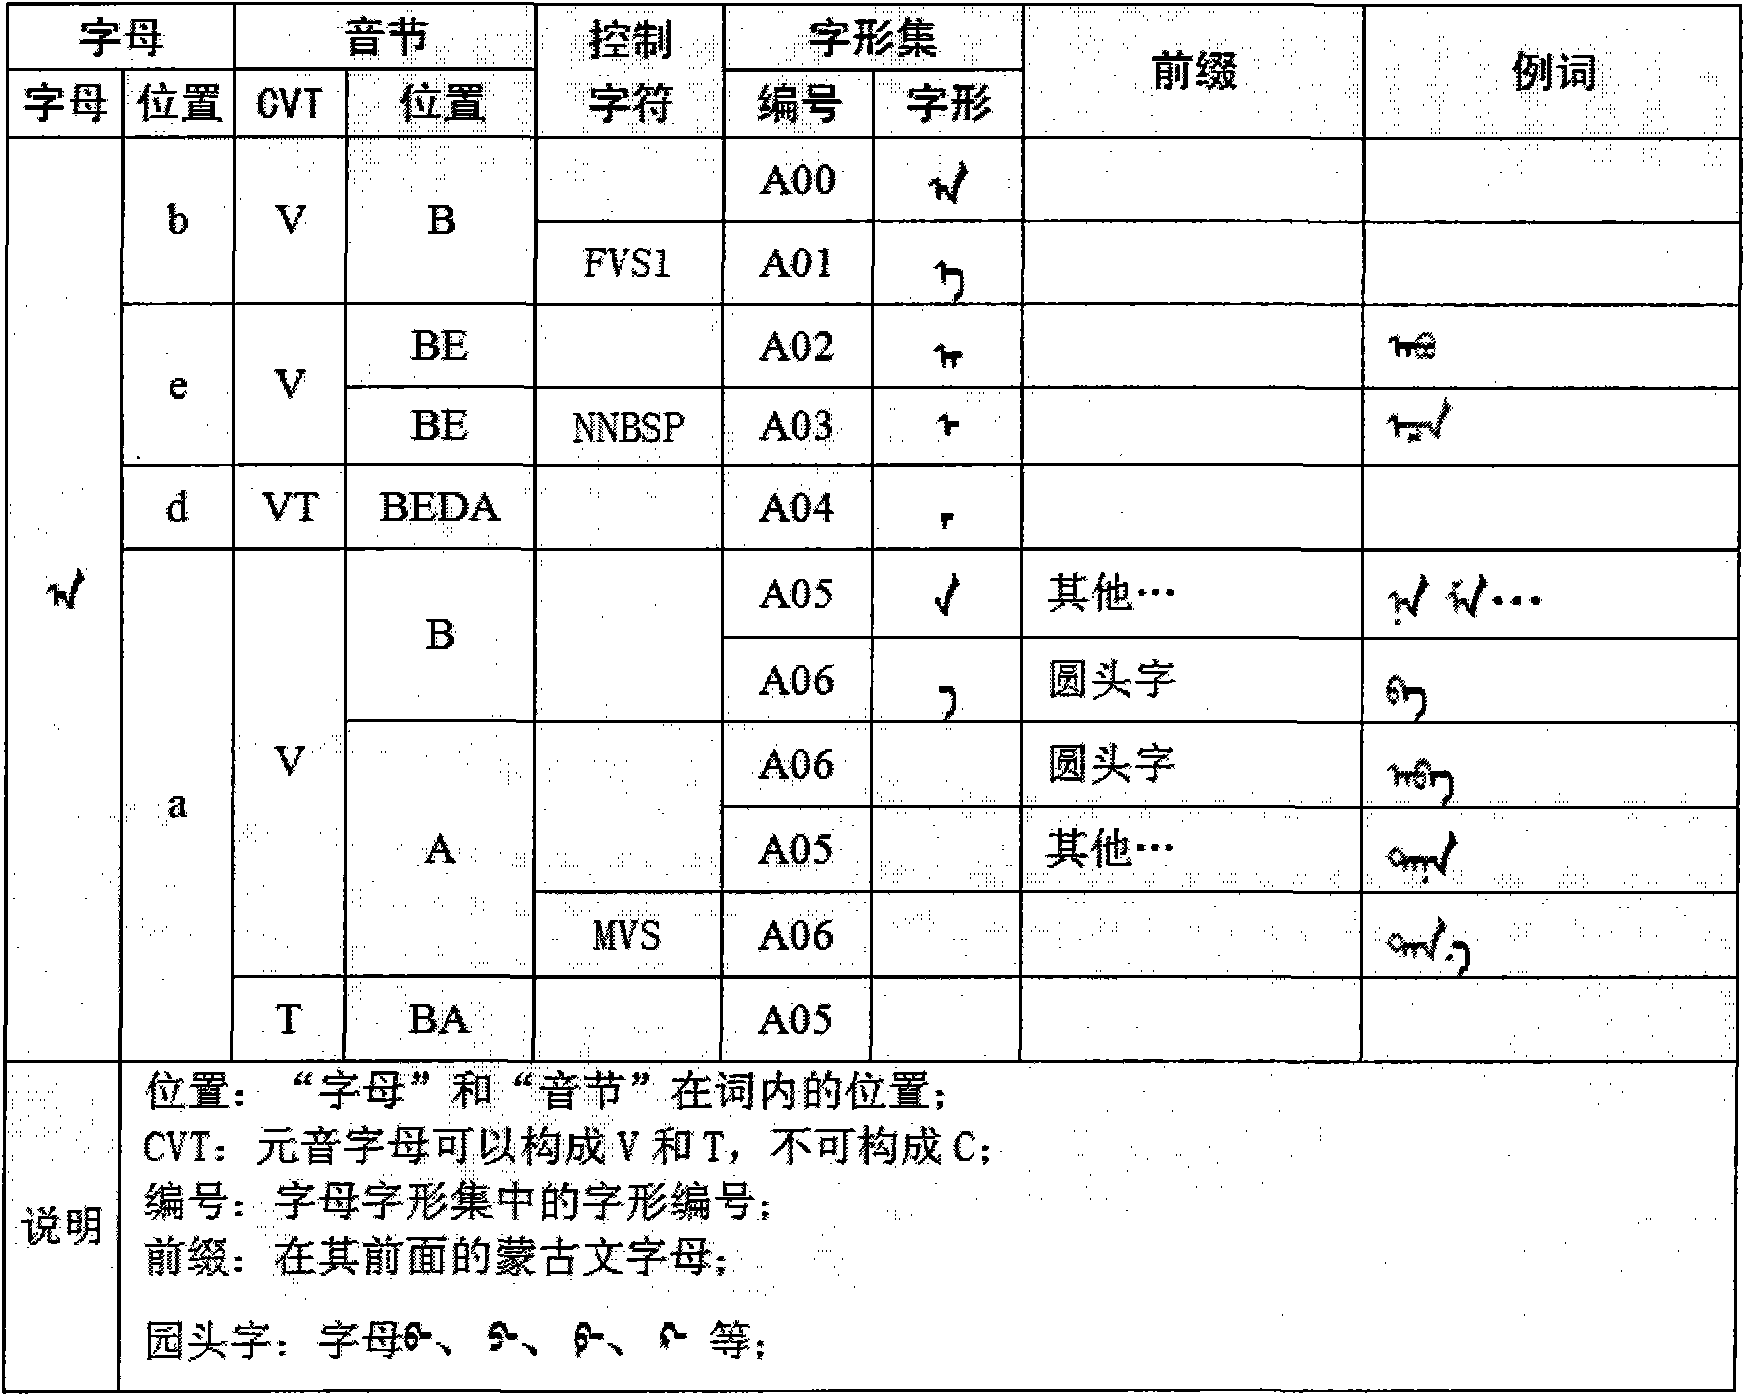 Character pattern generation method of Mongolian